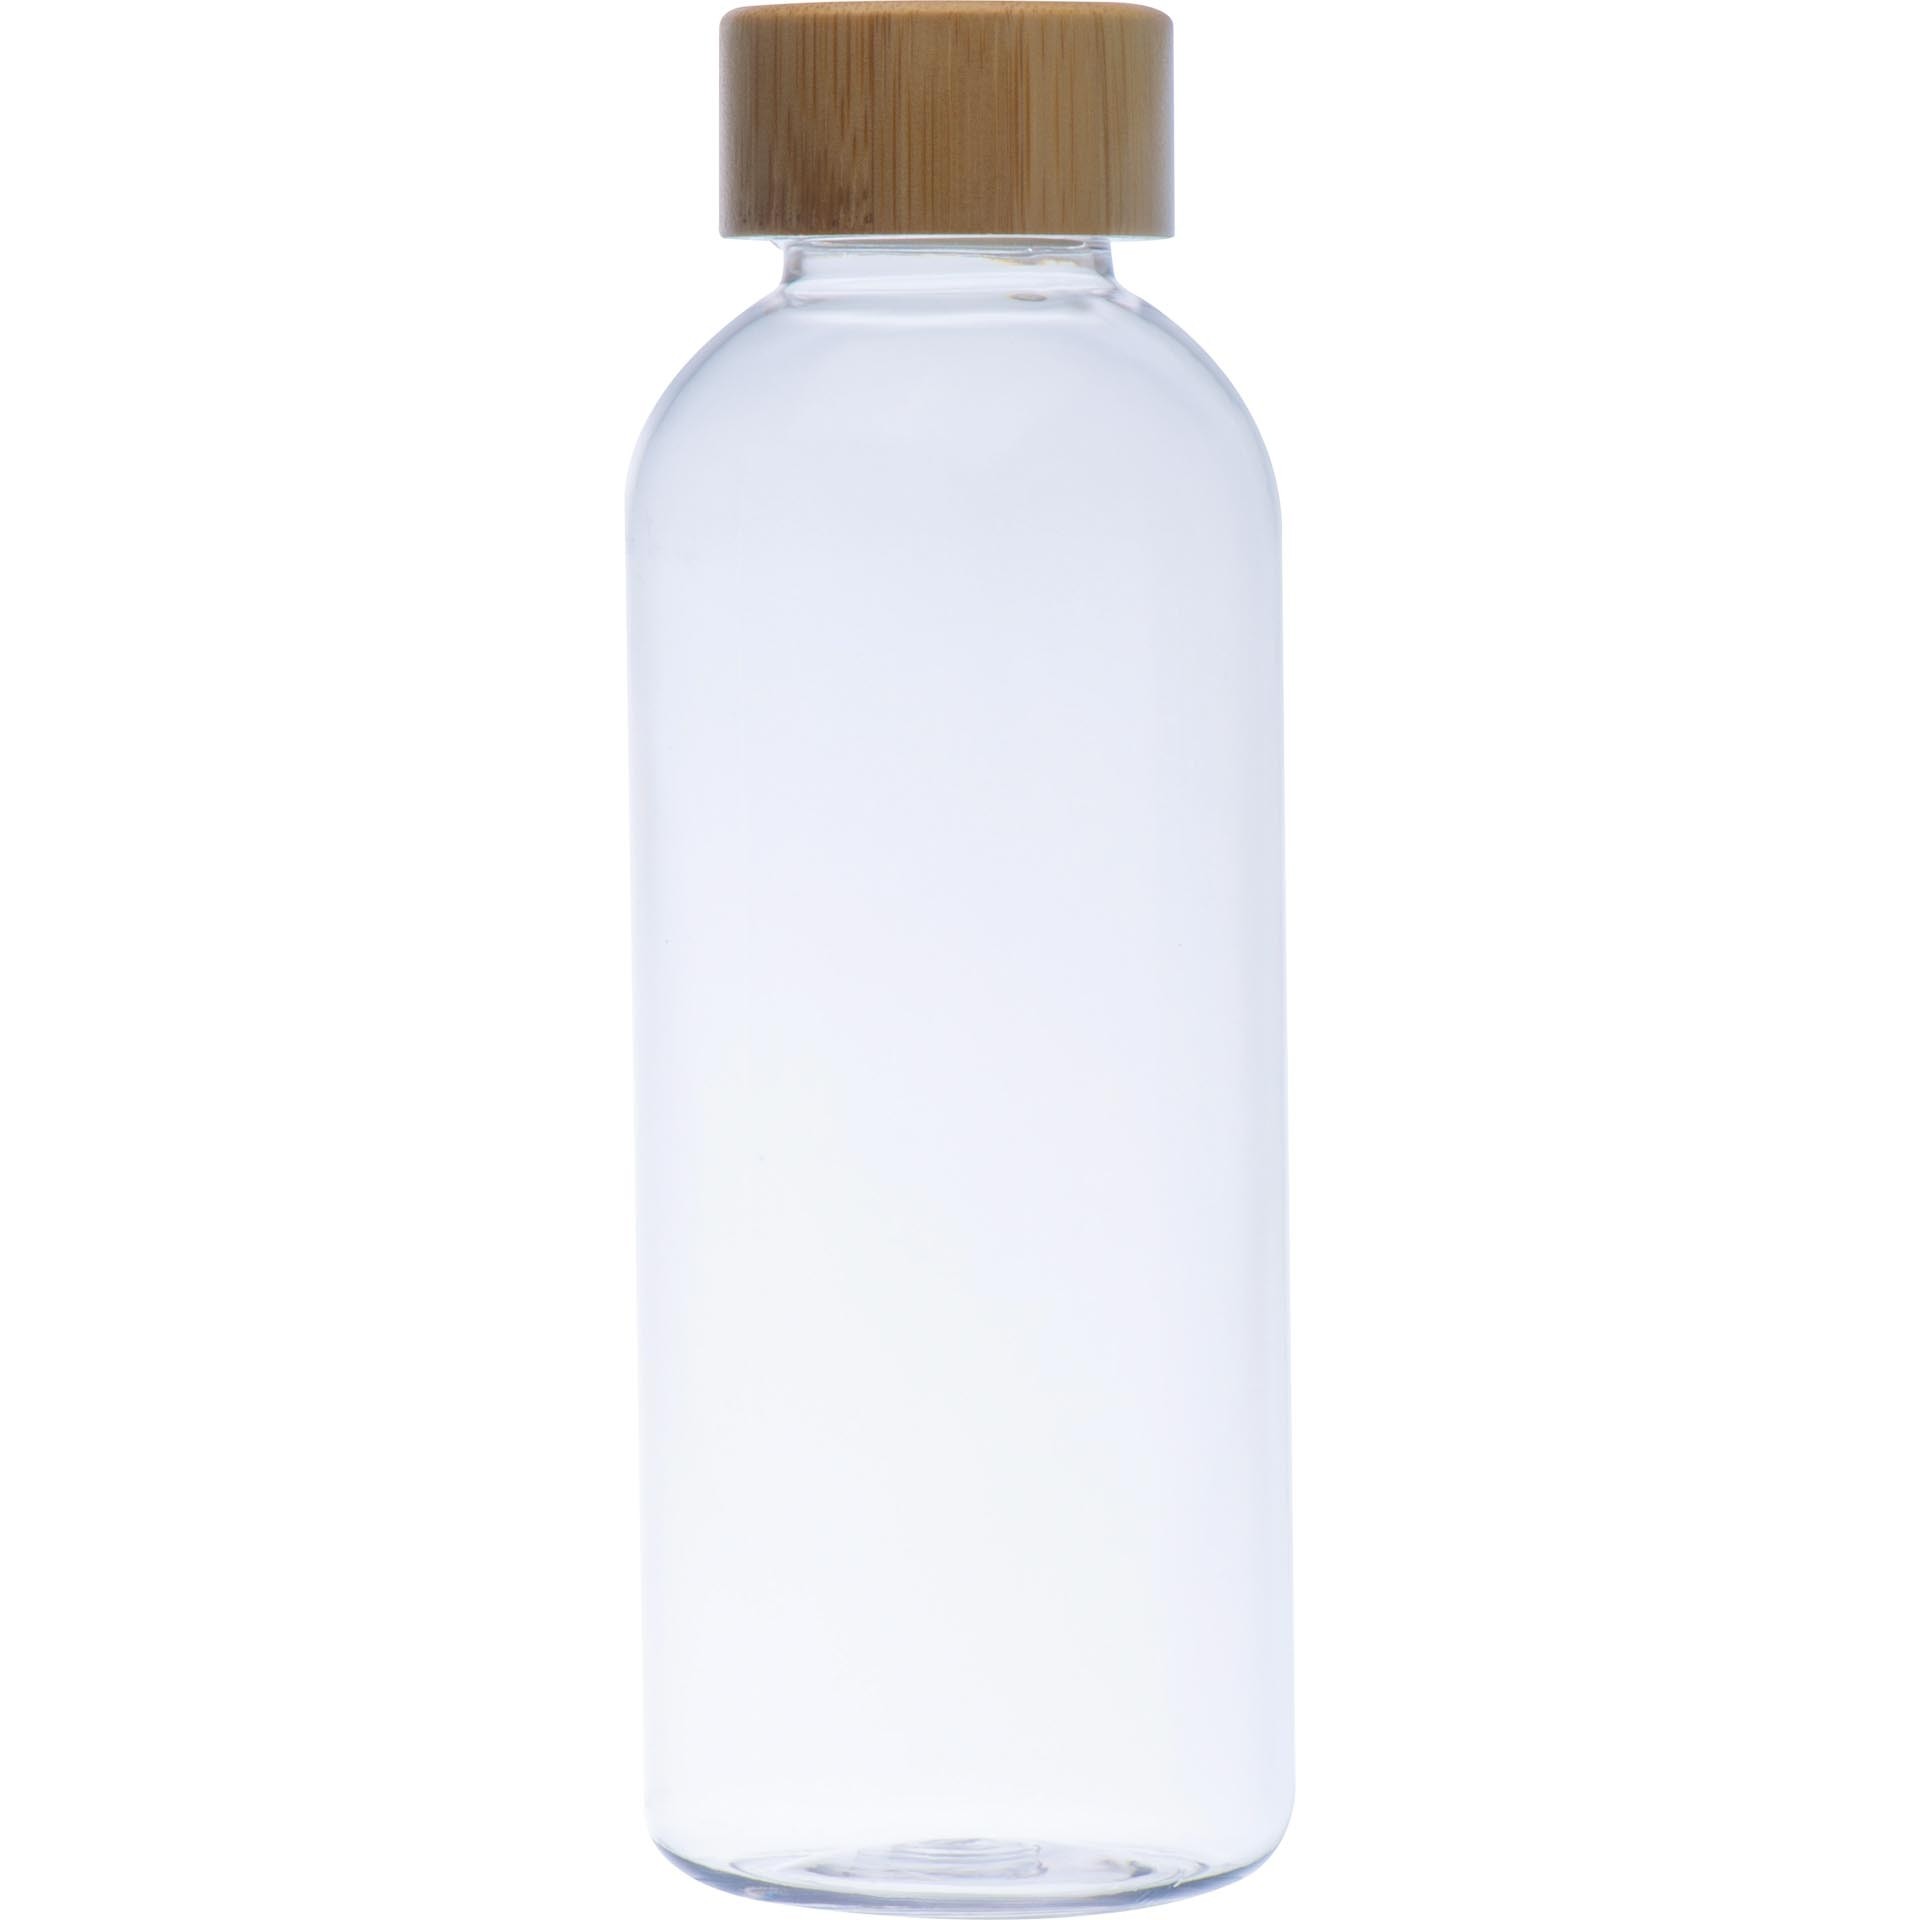 PET Trinkflasche mit Bambusdeckel, 600ml, transparent bedruckt als  Werbeartikel 365.207362